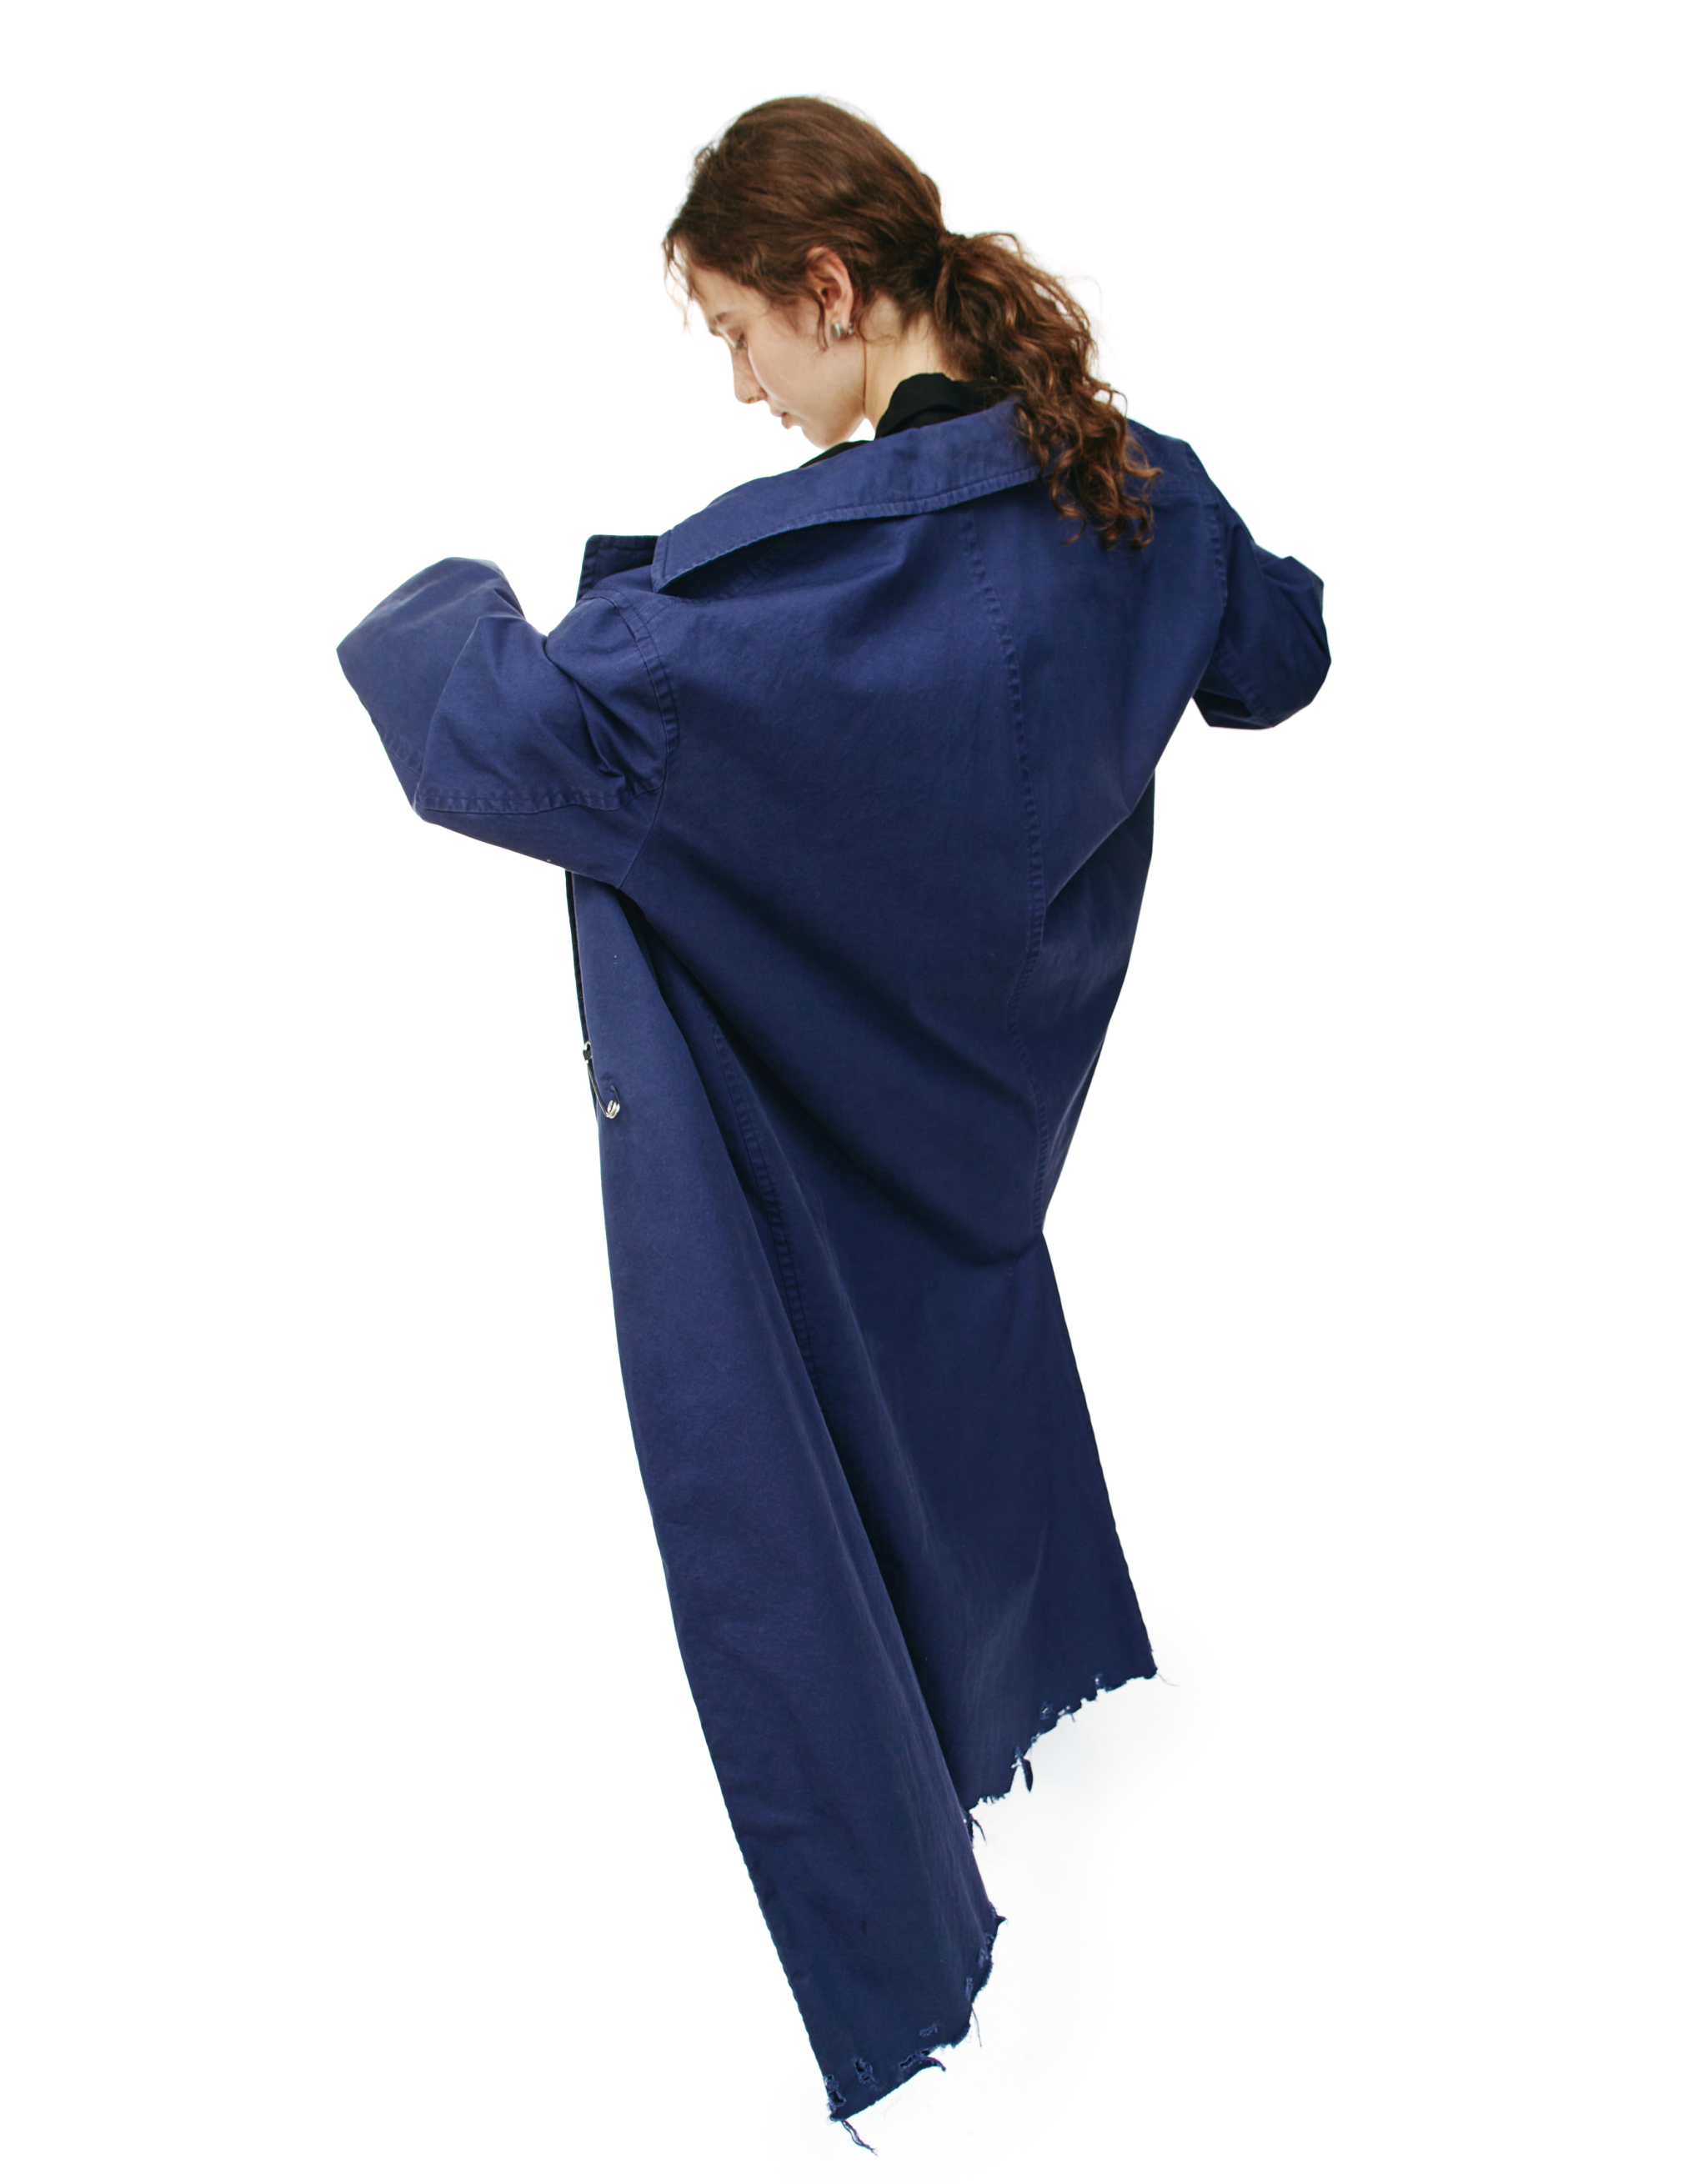 Оверсайз пальто с клетчатым подкладом Balenciaga 681165/TKP06/4140, размер 3 681165/TKP06/4140 - фото 5